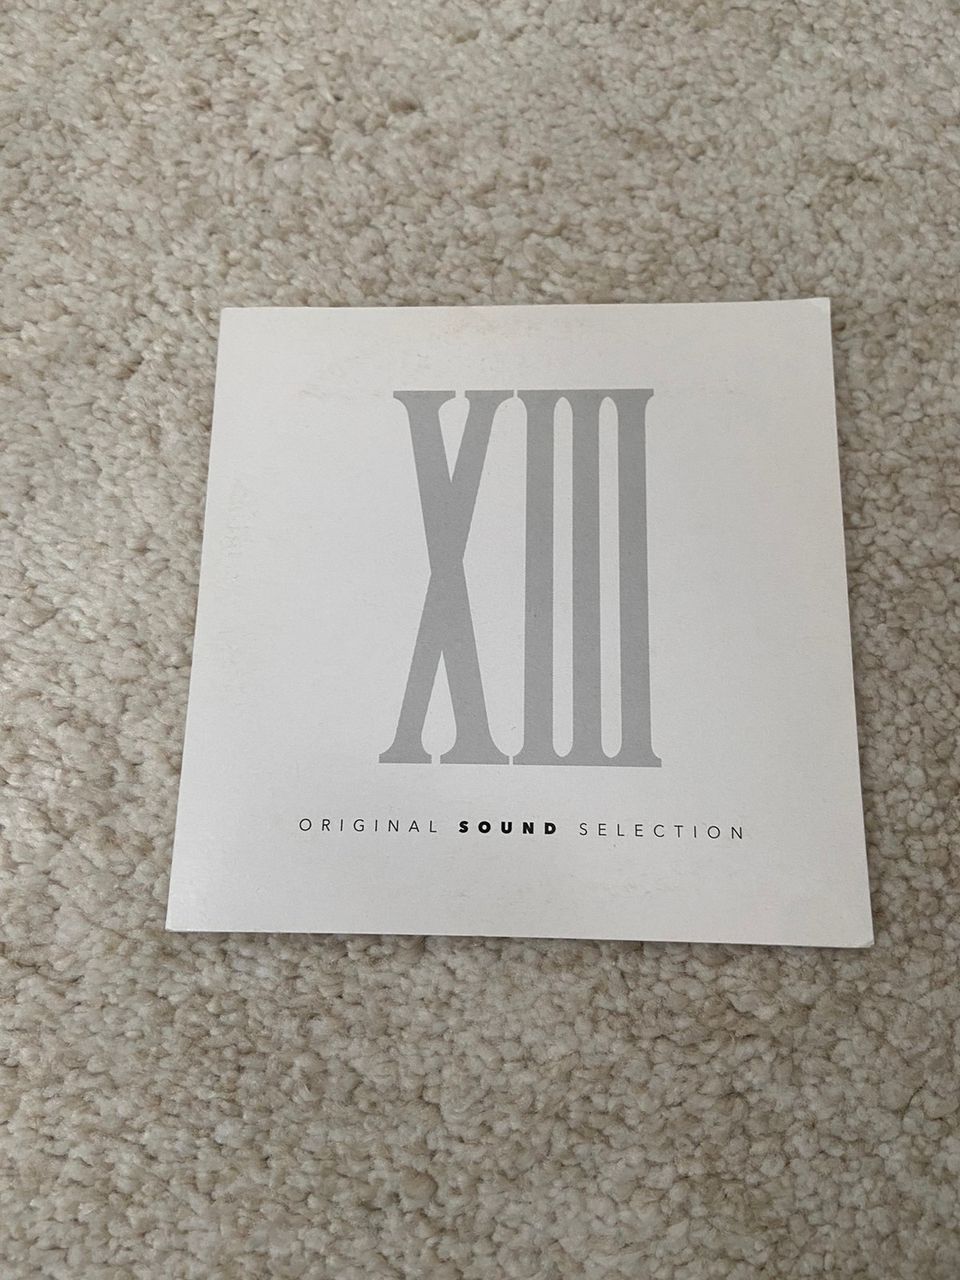 Final Fantasy 13 (XIII) Sound Selection